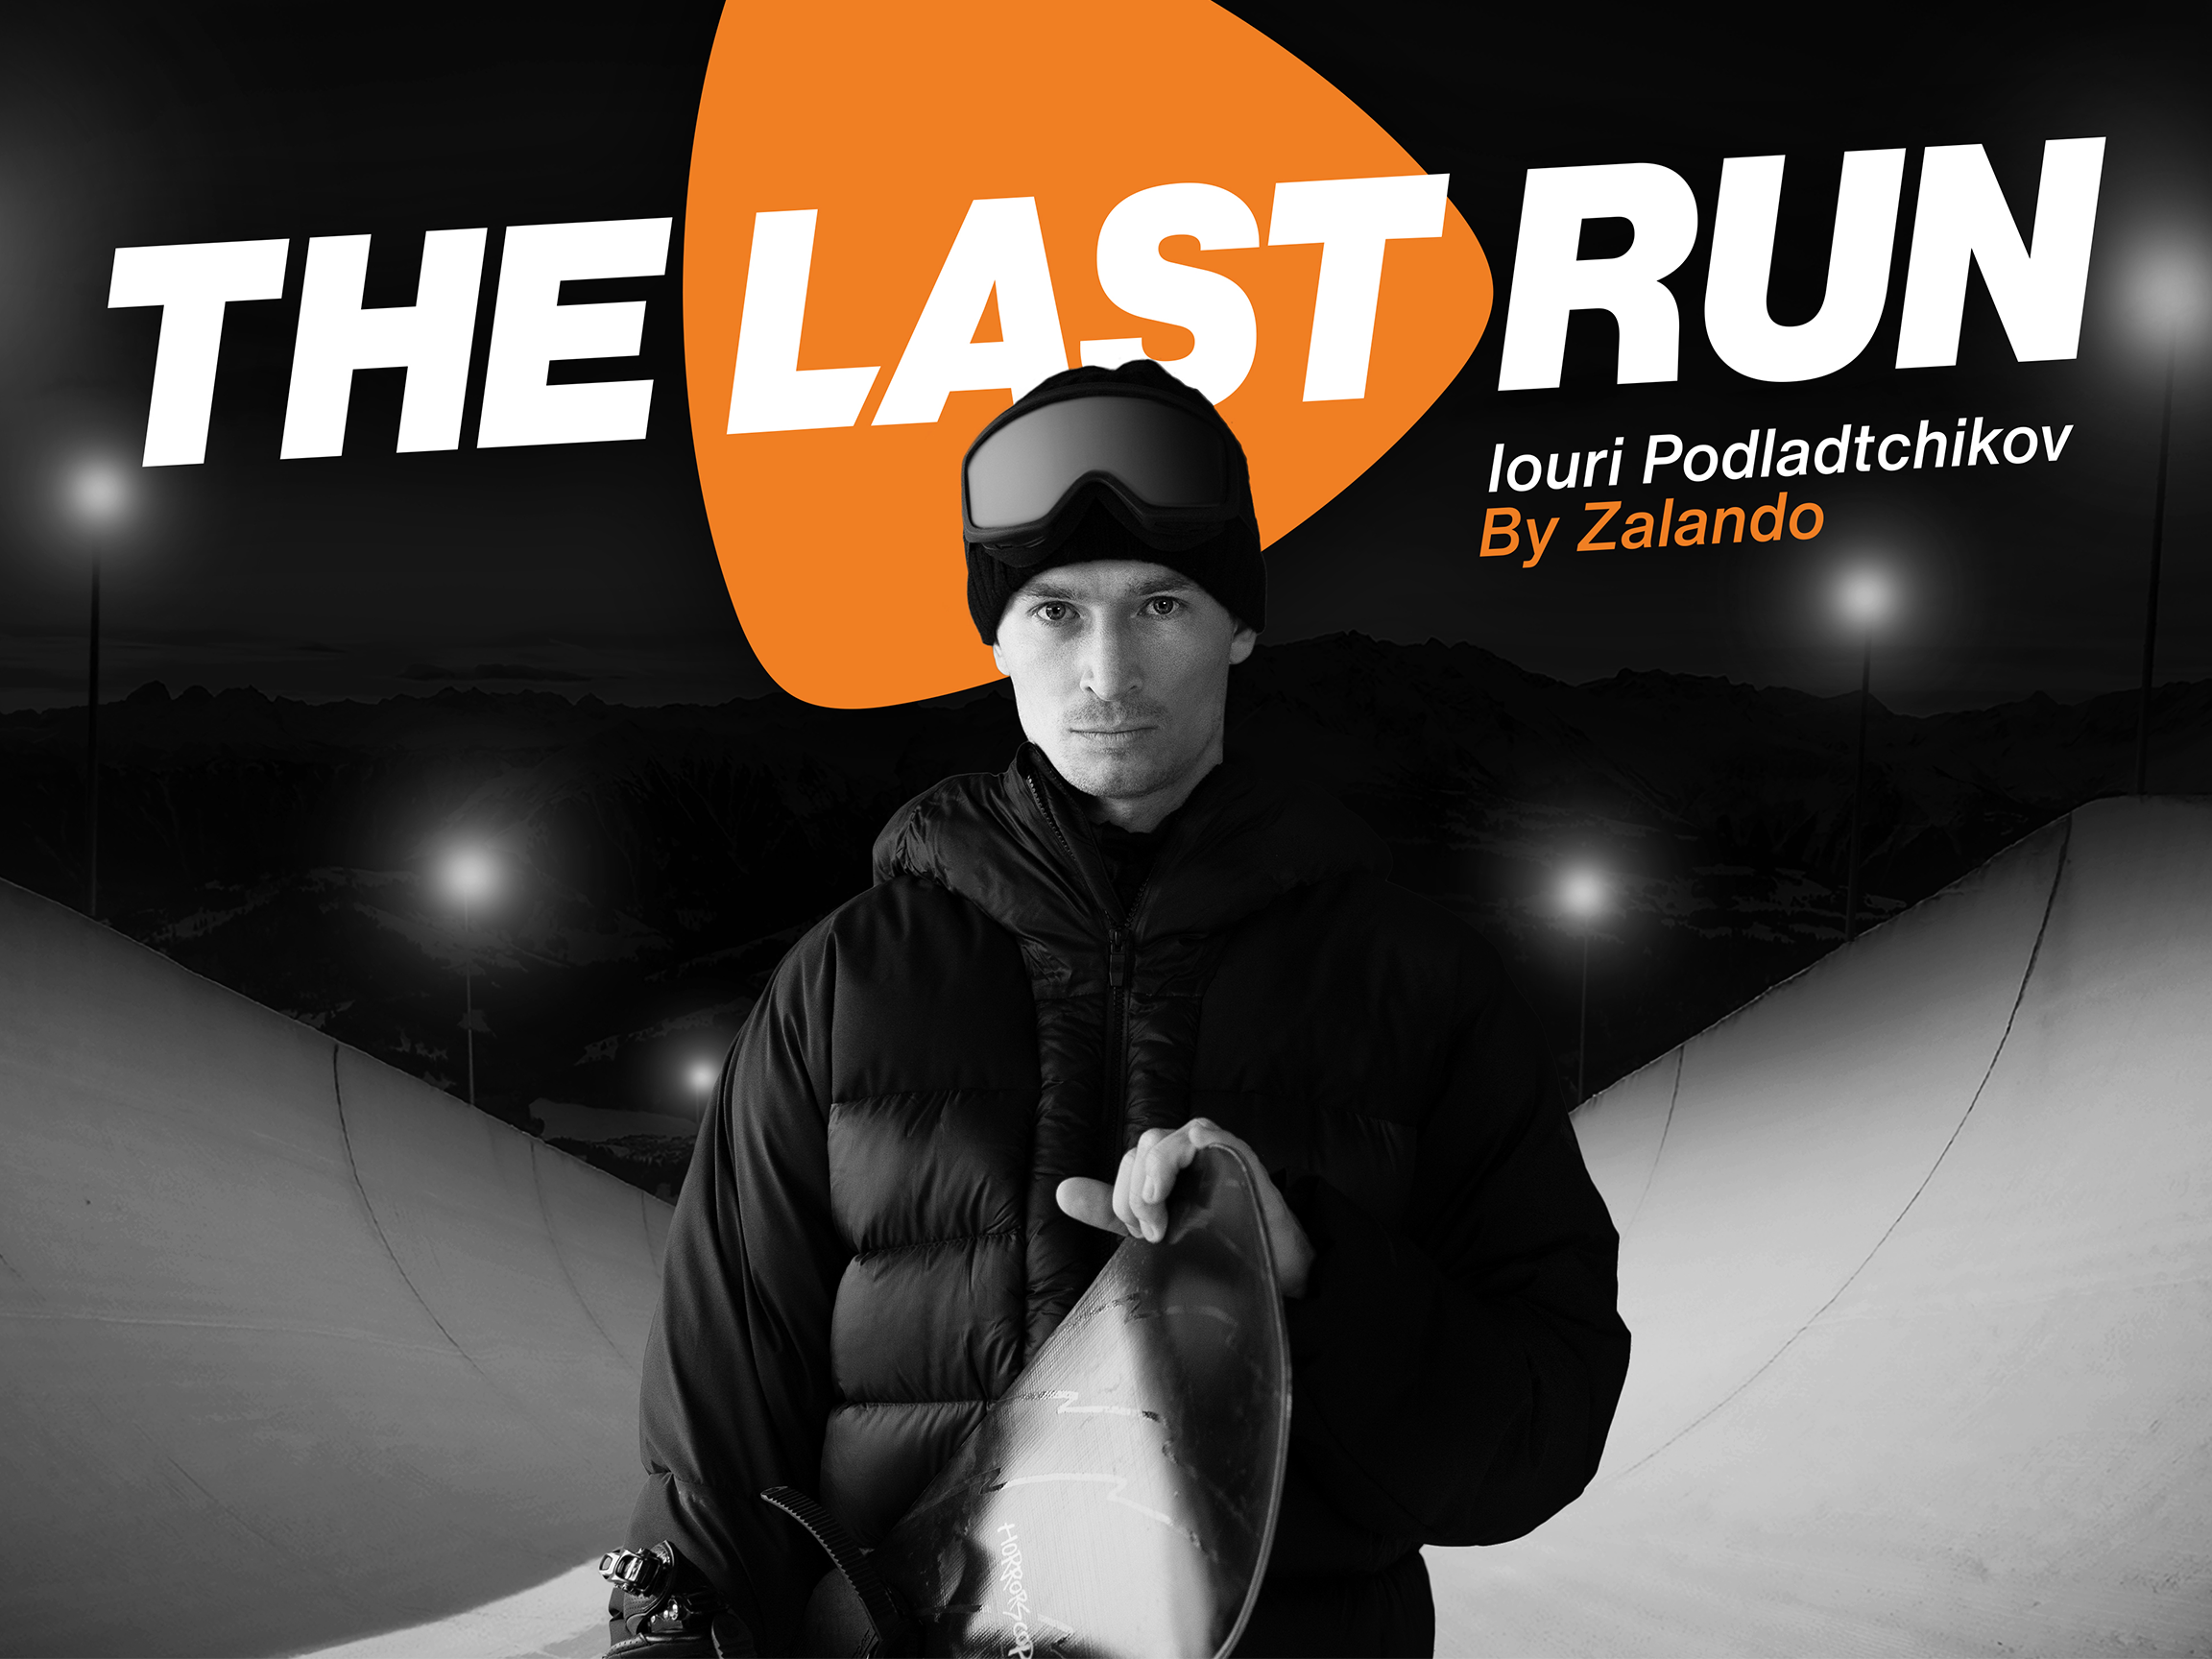 Image of former professional athlete Iouri Podladtchikov in snowboard gear for Jung von Matt LIMMAT Zurich campaign "The last run" for Zalando.